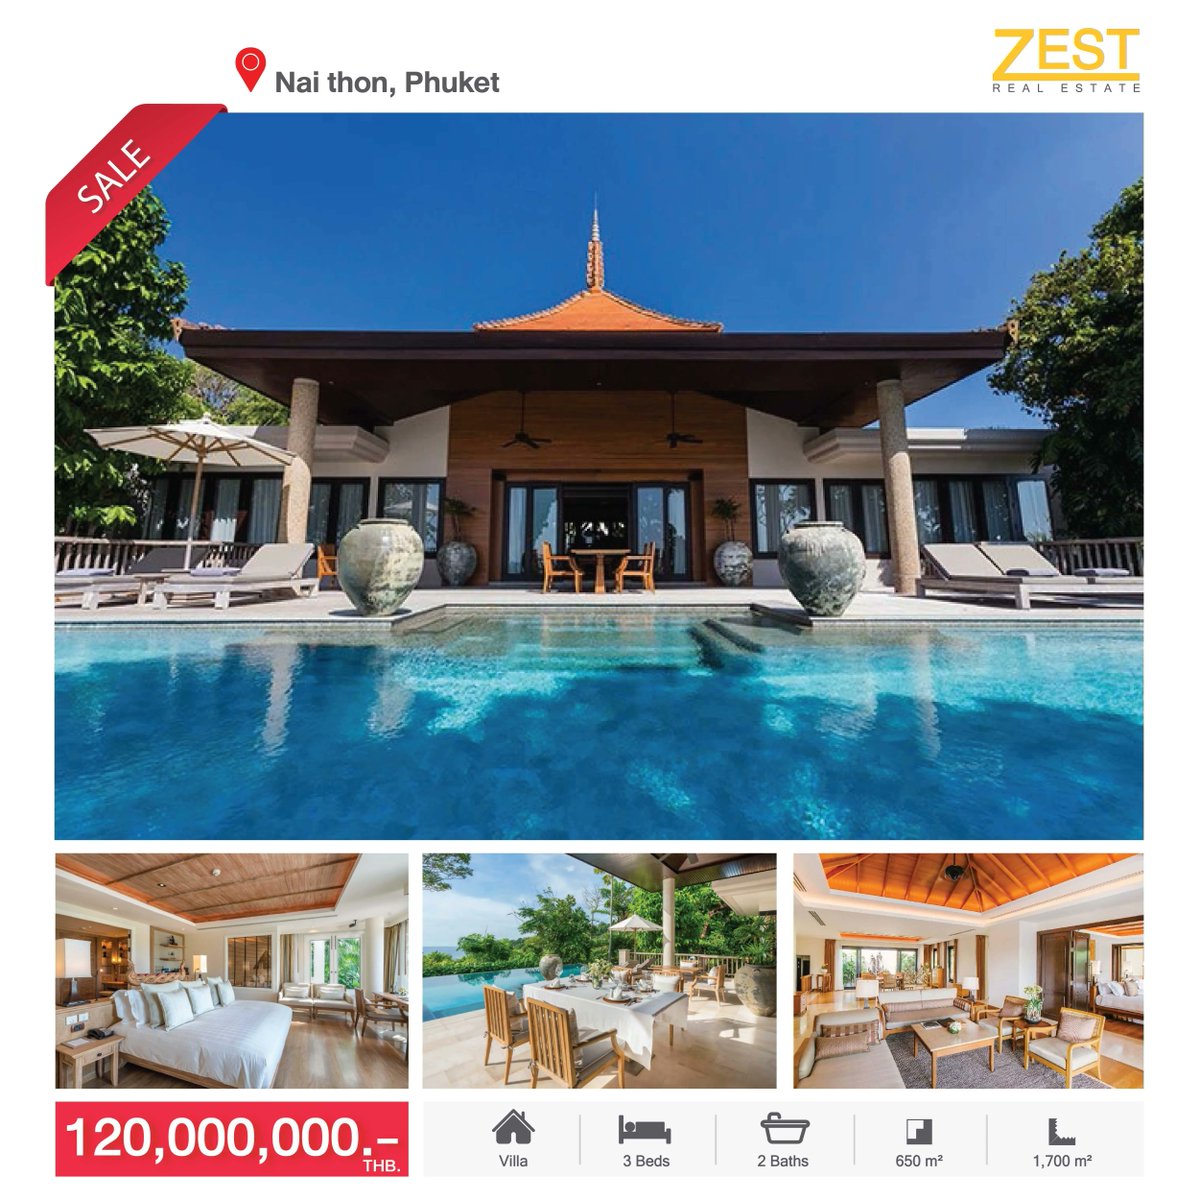 Villa for sale in Nai thon, Phuket
3 Beds/ 2 Baths/ 650 sqm.

120,000,000 THB.
buff.ly/3MgfCfO 

#zestrealestate #zestphuket  #luxuryvillas  #PhuketVillas #villainphuket #villaforsale #PropertylnPhuket